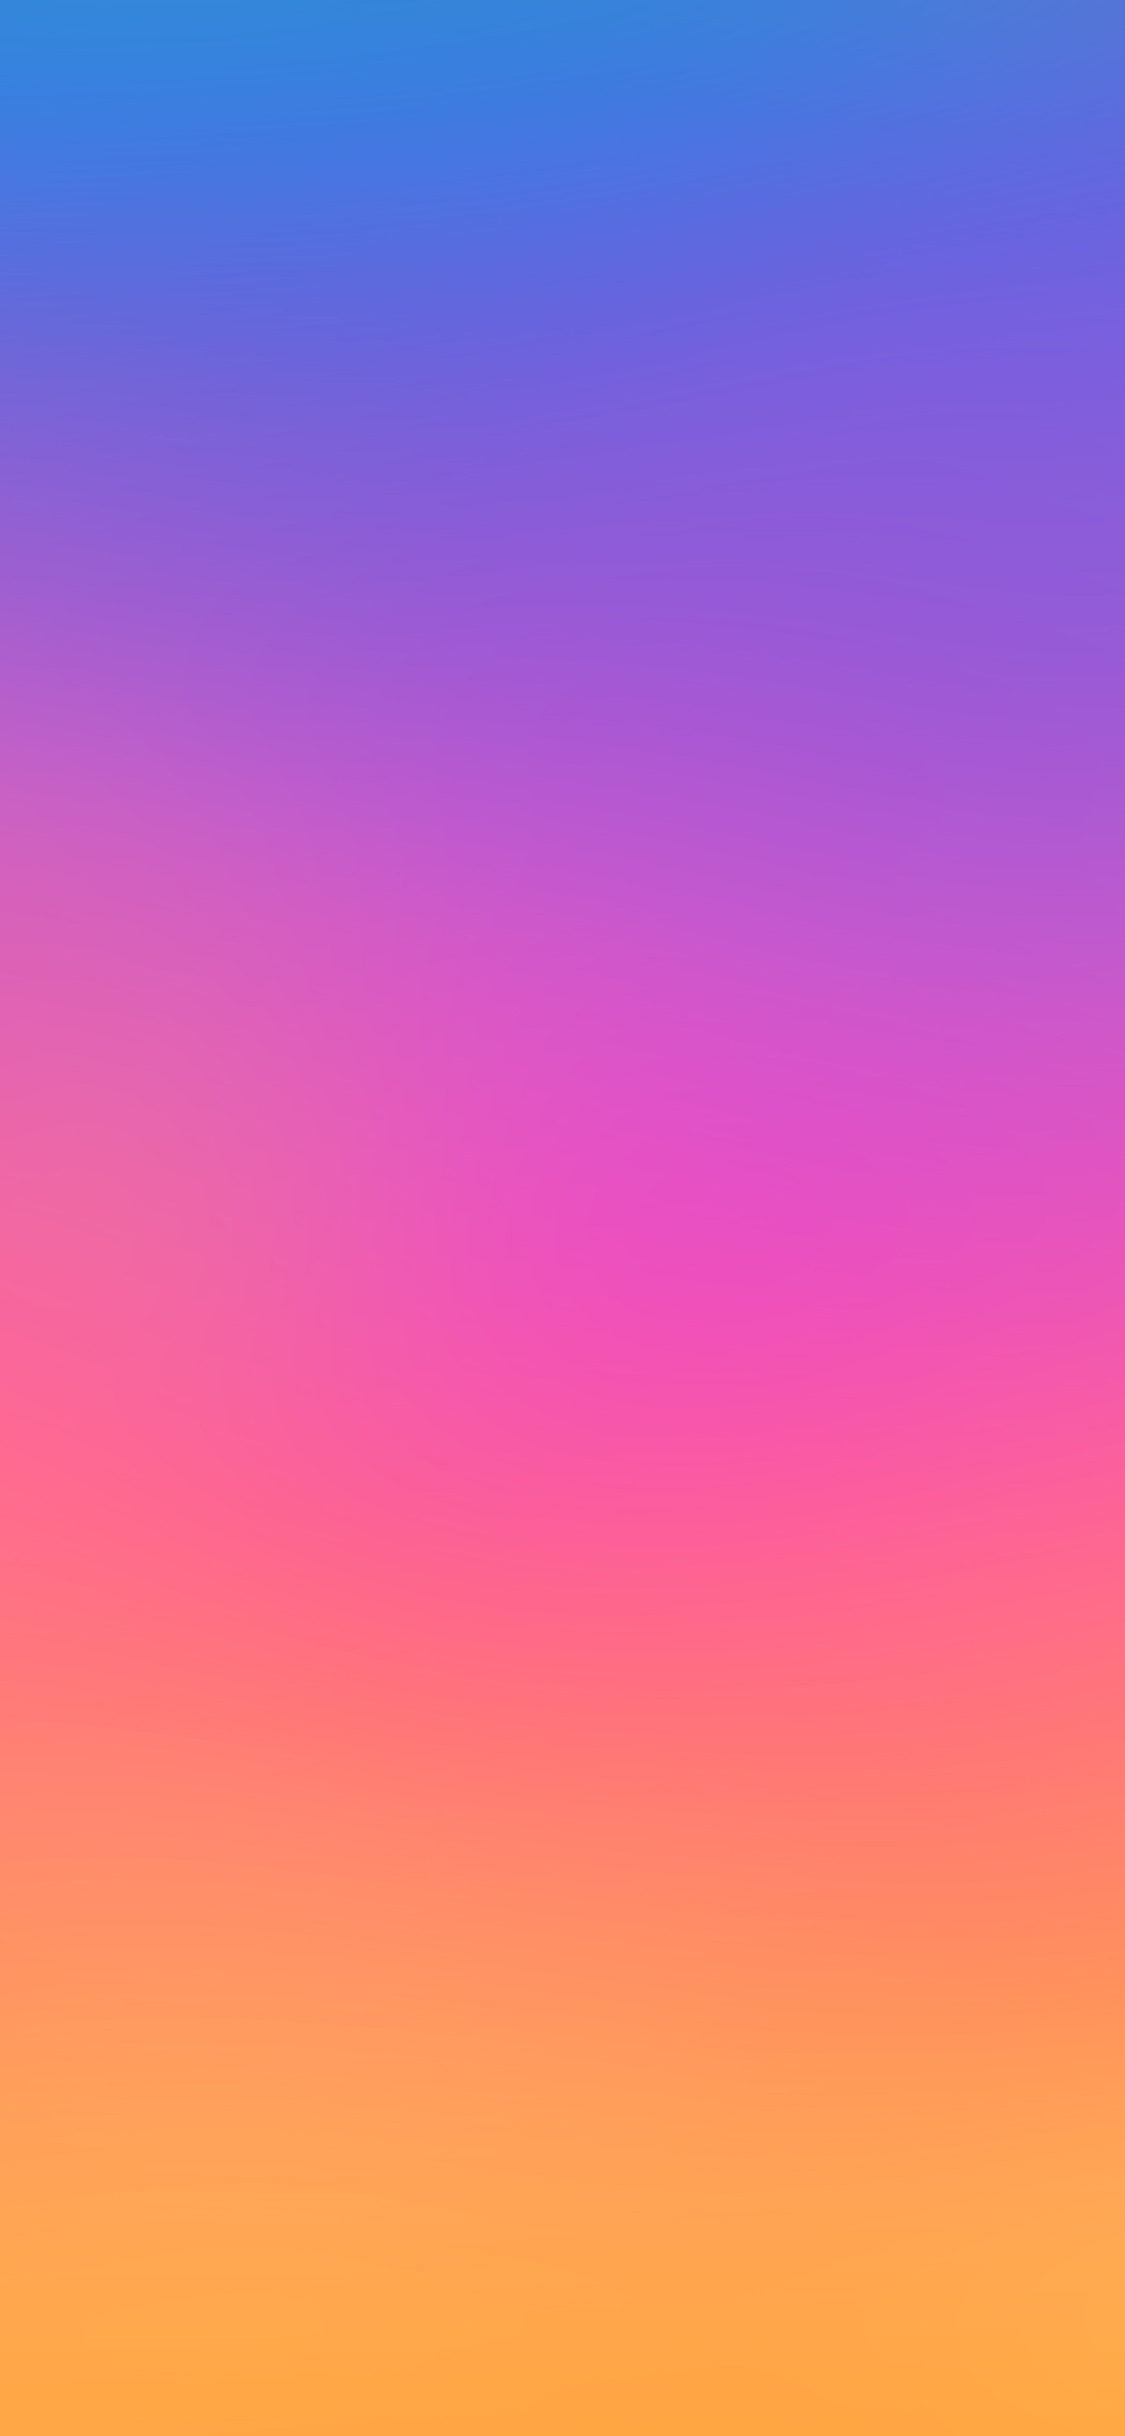 1125x2436 | iPhone11 wallpaper | sk25-romantic-sky-purple-red-yellow-blur-gradati